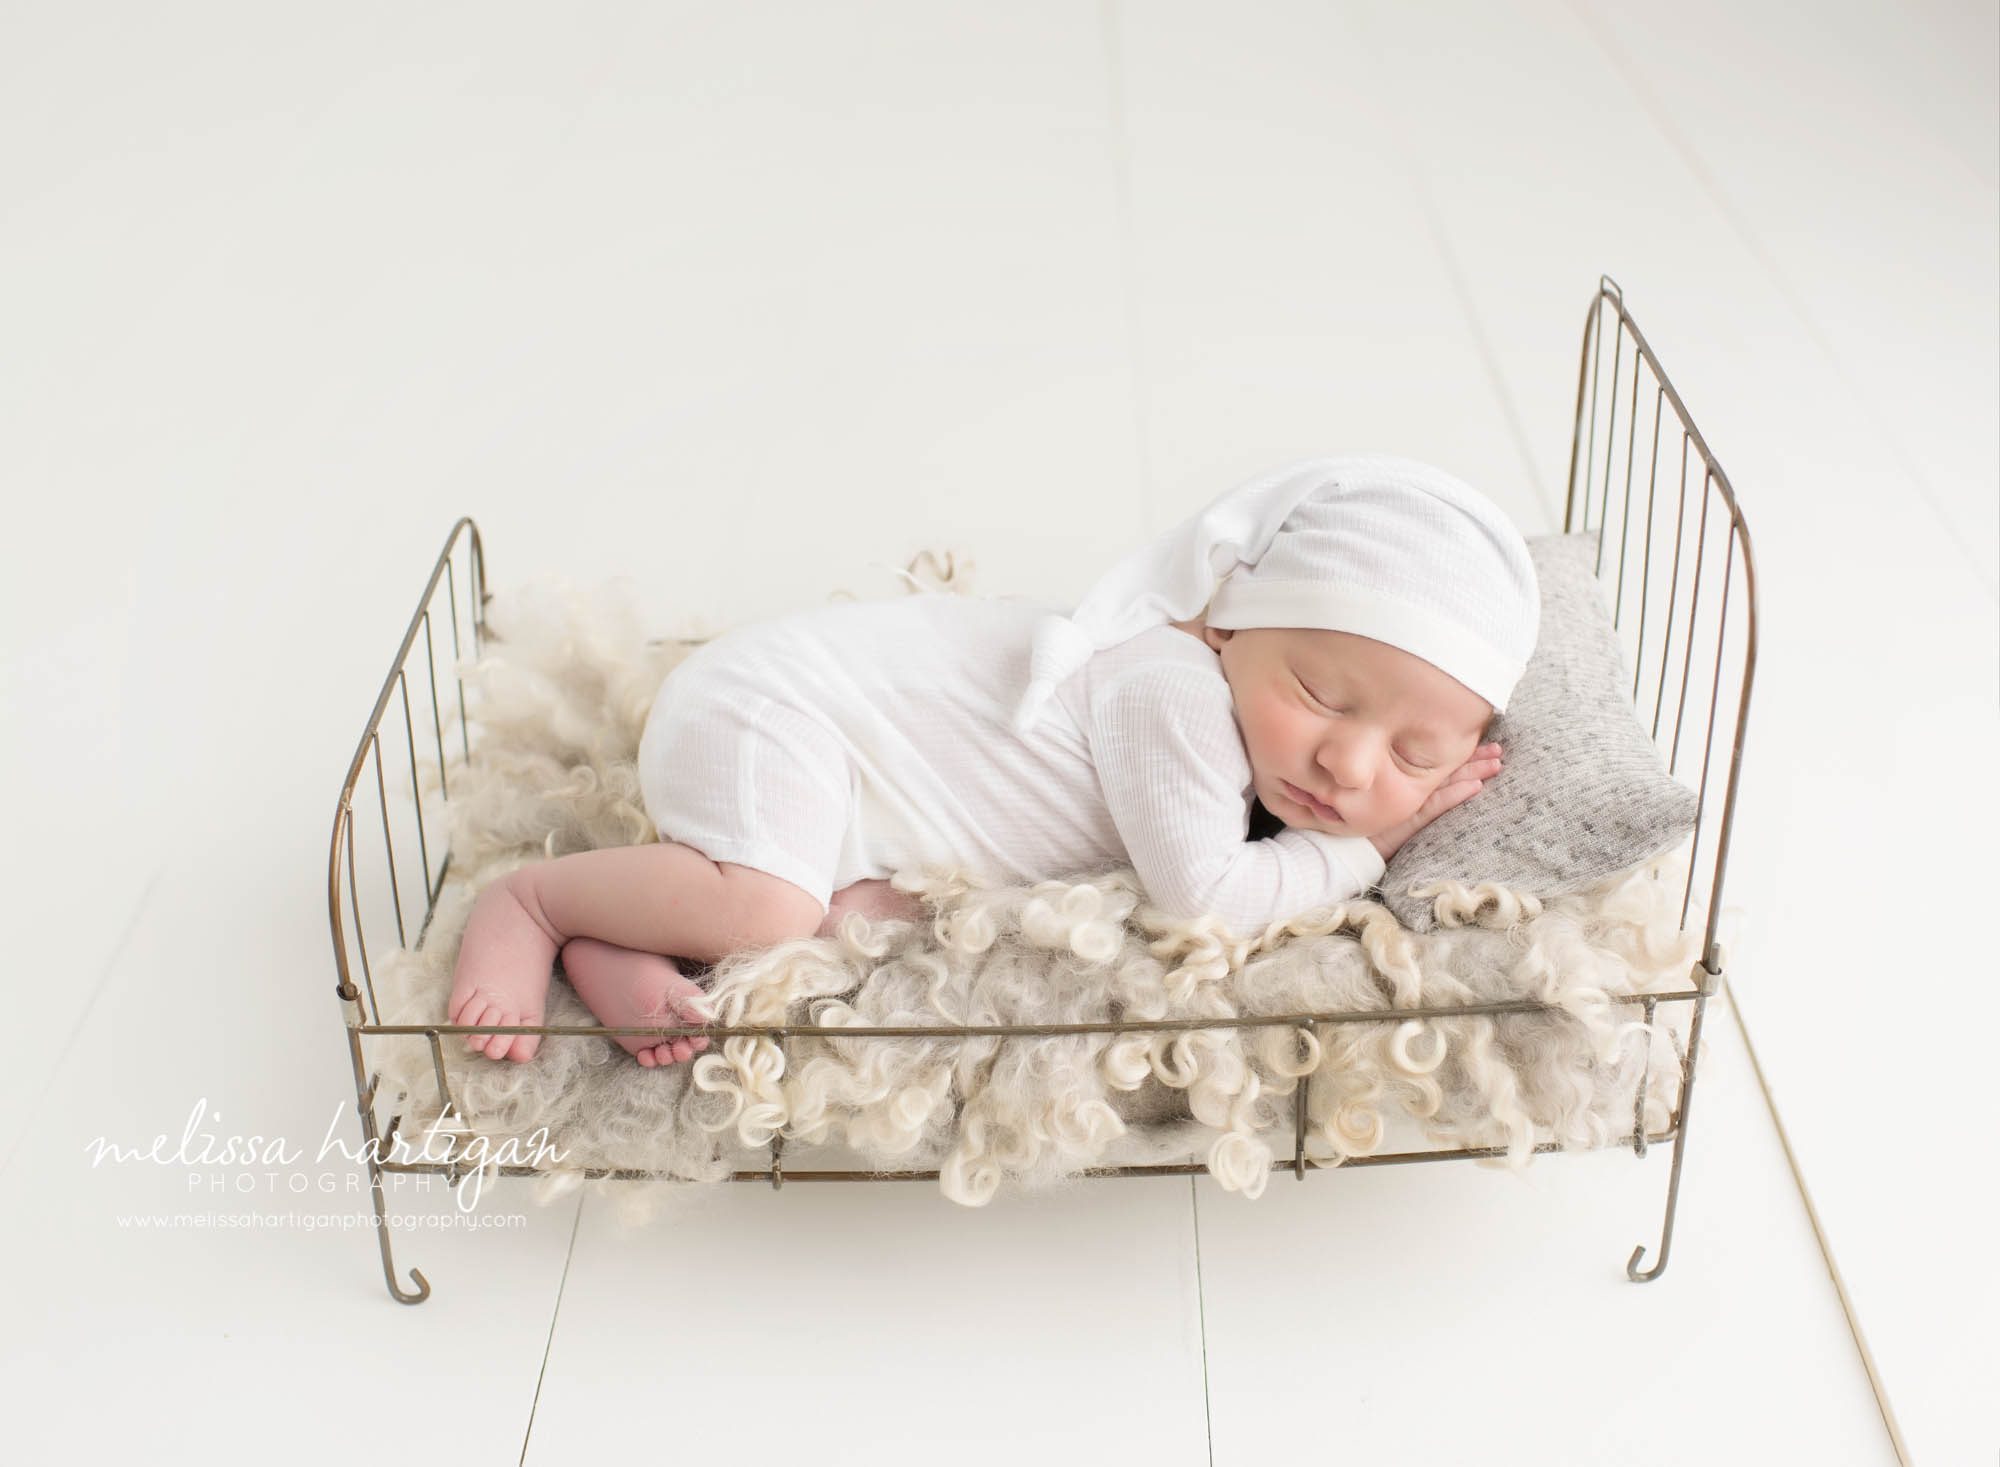 Newborn Photographer Connecticut newborn pose baby sleeping in little metal bed